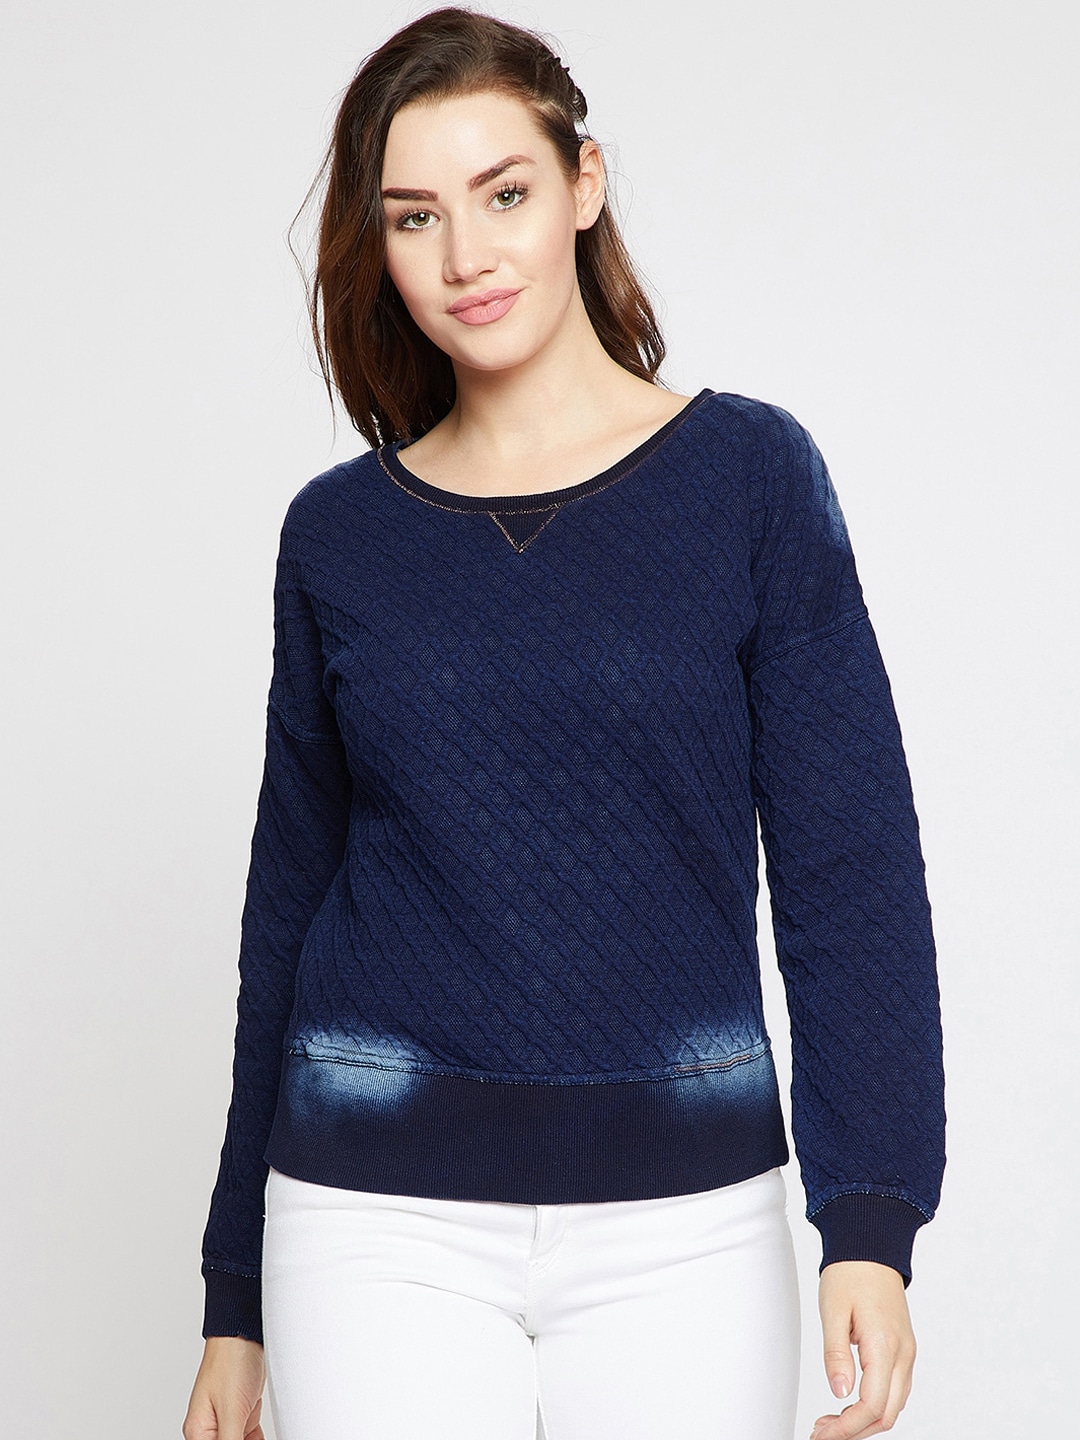 Carlton London Women Blue Solid Sweatshirt Price in India